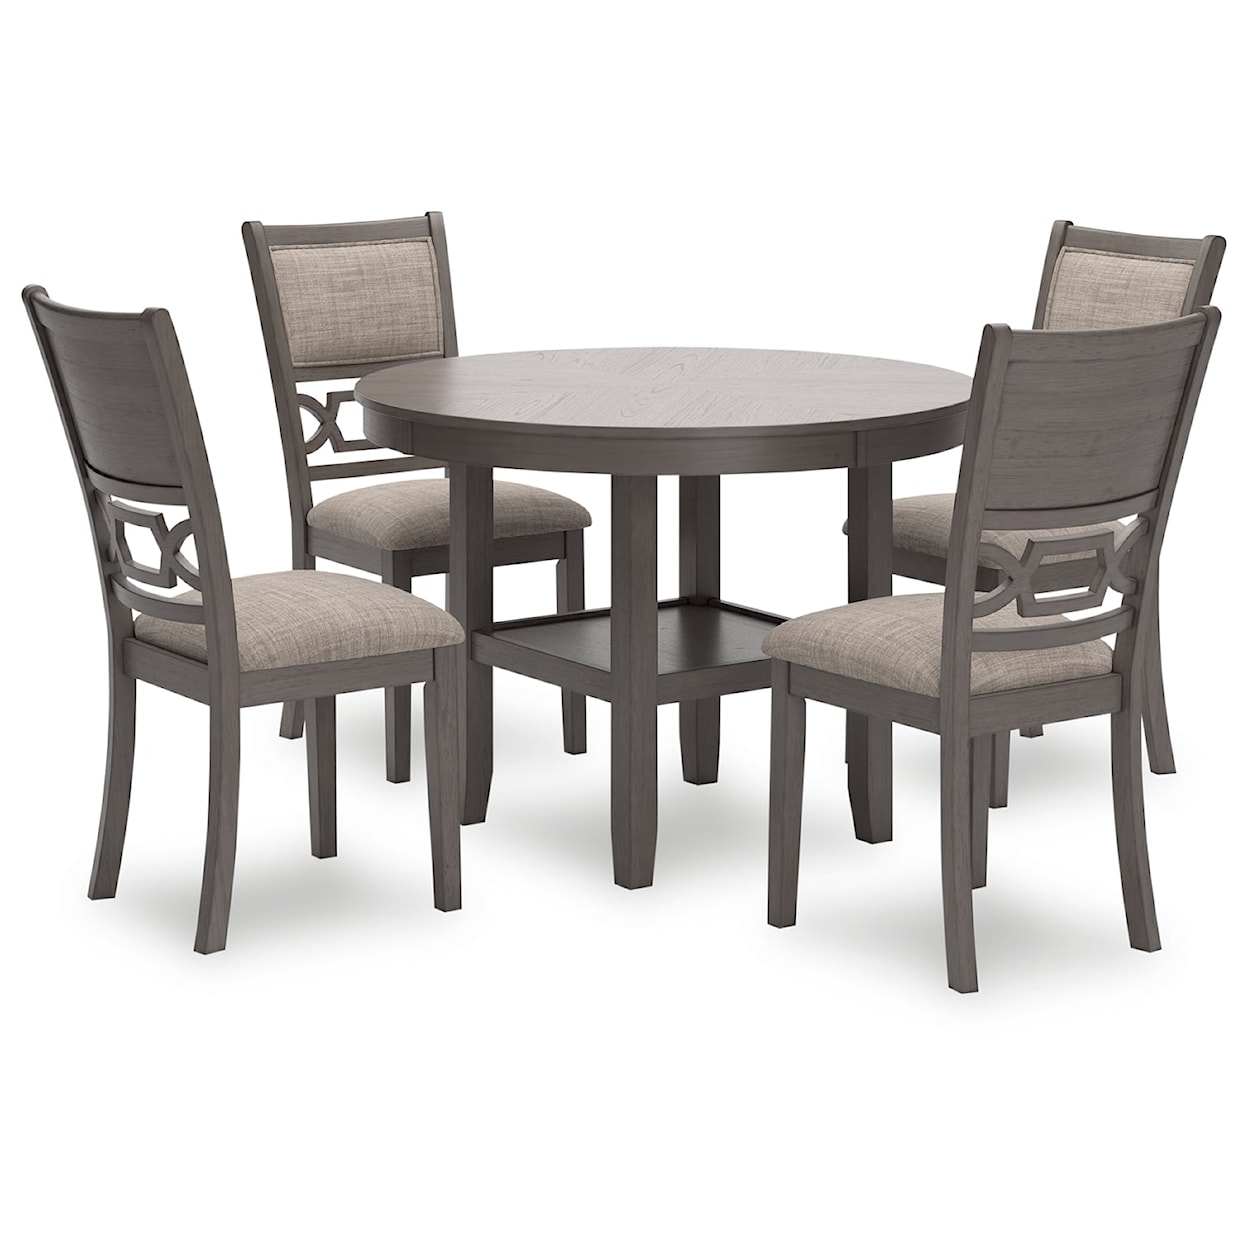 Ashley Furniture Signature Design Wrenning Dining Room Table Set